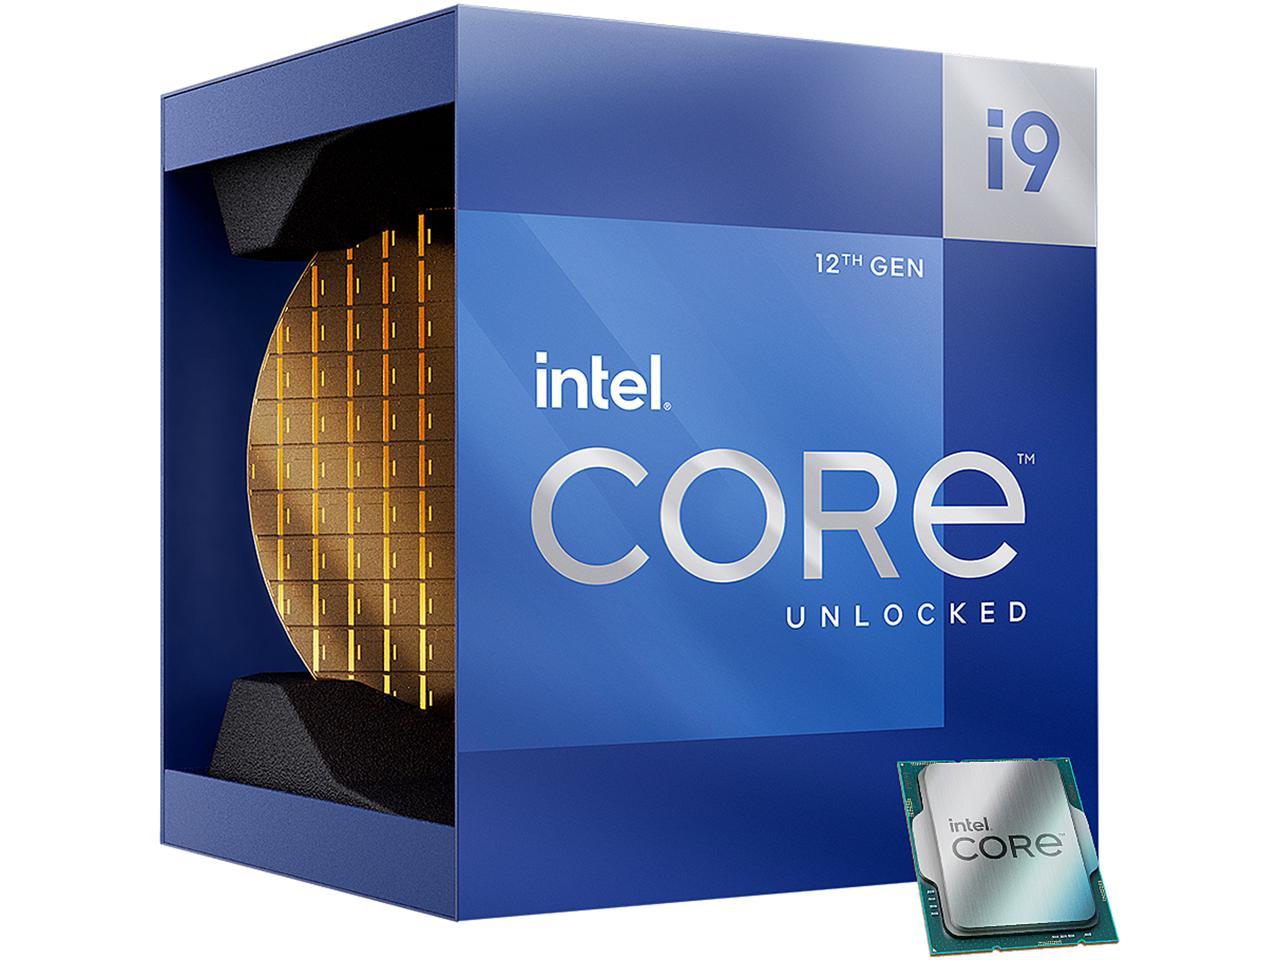 Intel Core i9-12900K 16-Core (8P+8E) 3.2GHz 125W Desktop CPU Processor $360 + Free Shipping